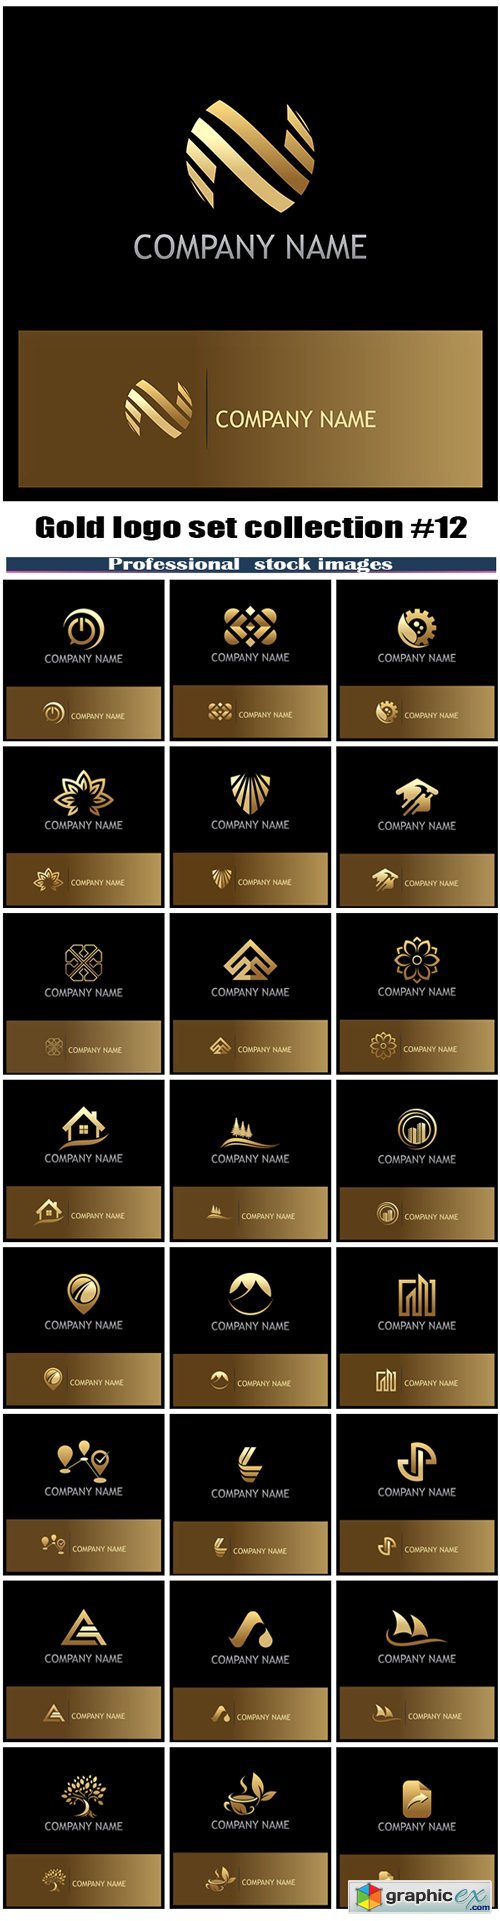 Gold logo set collection #12